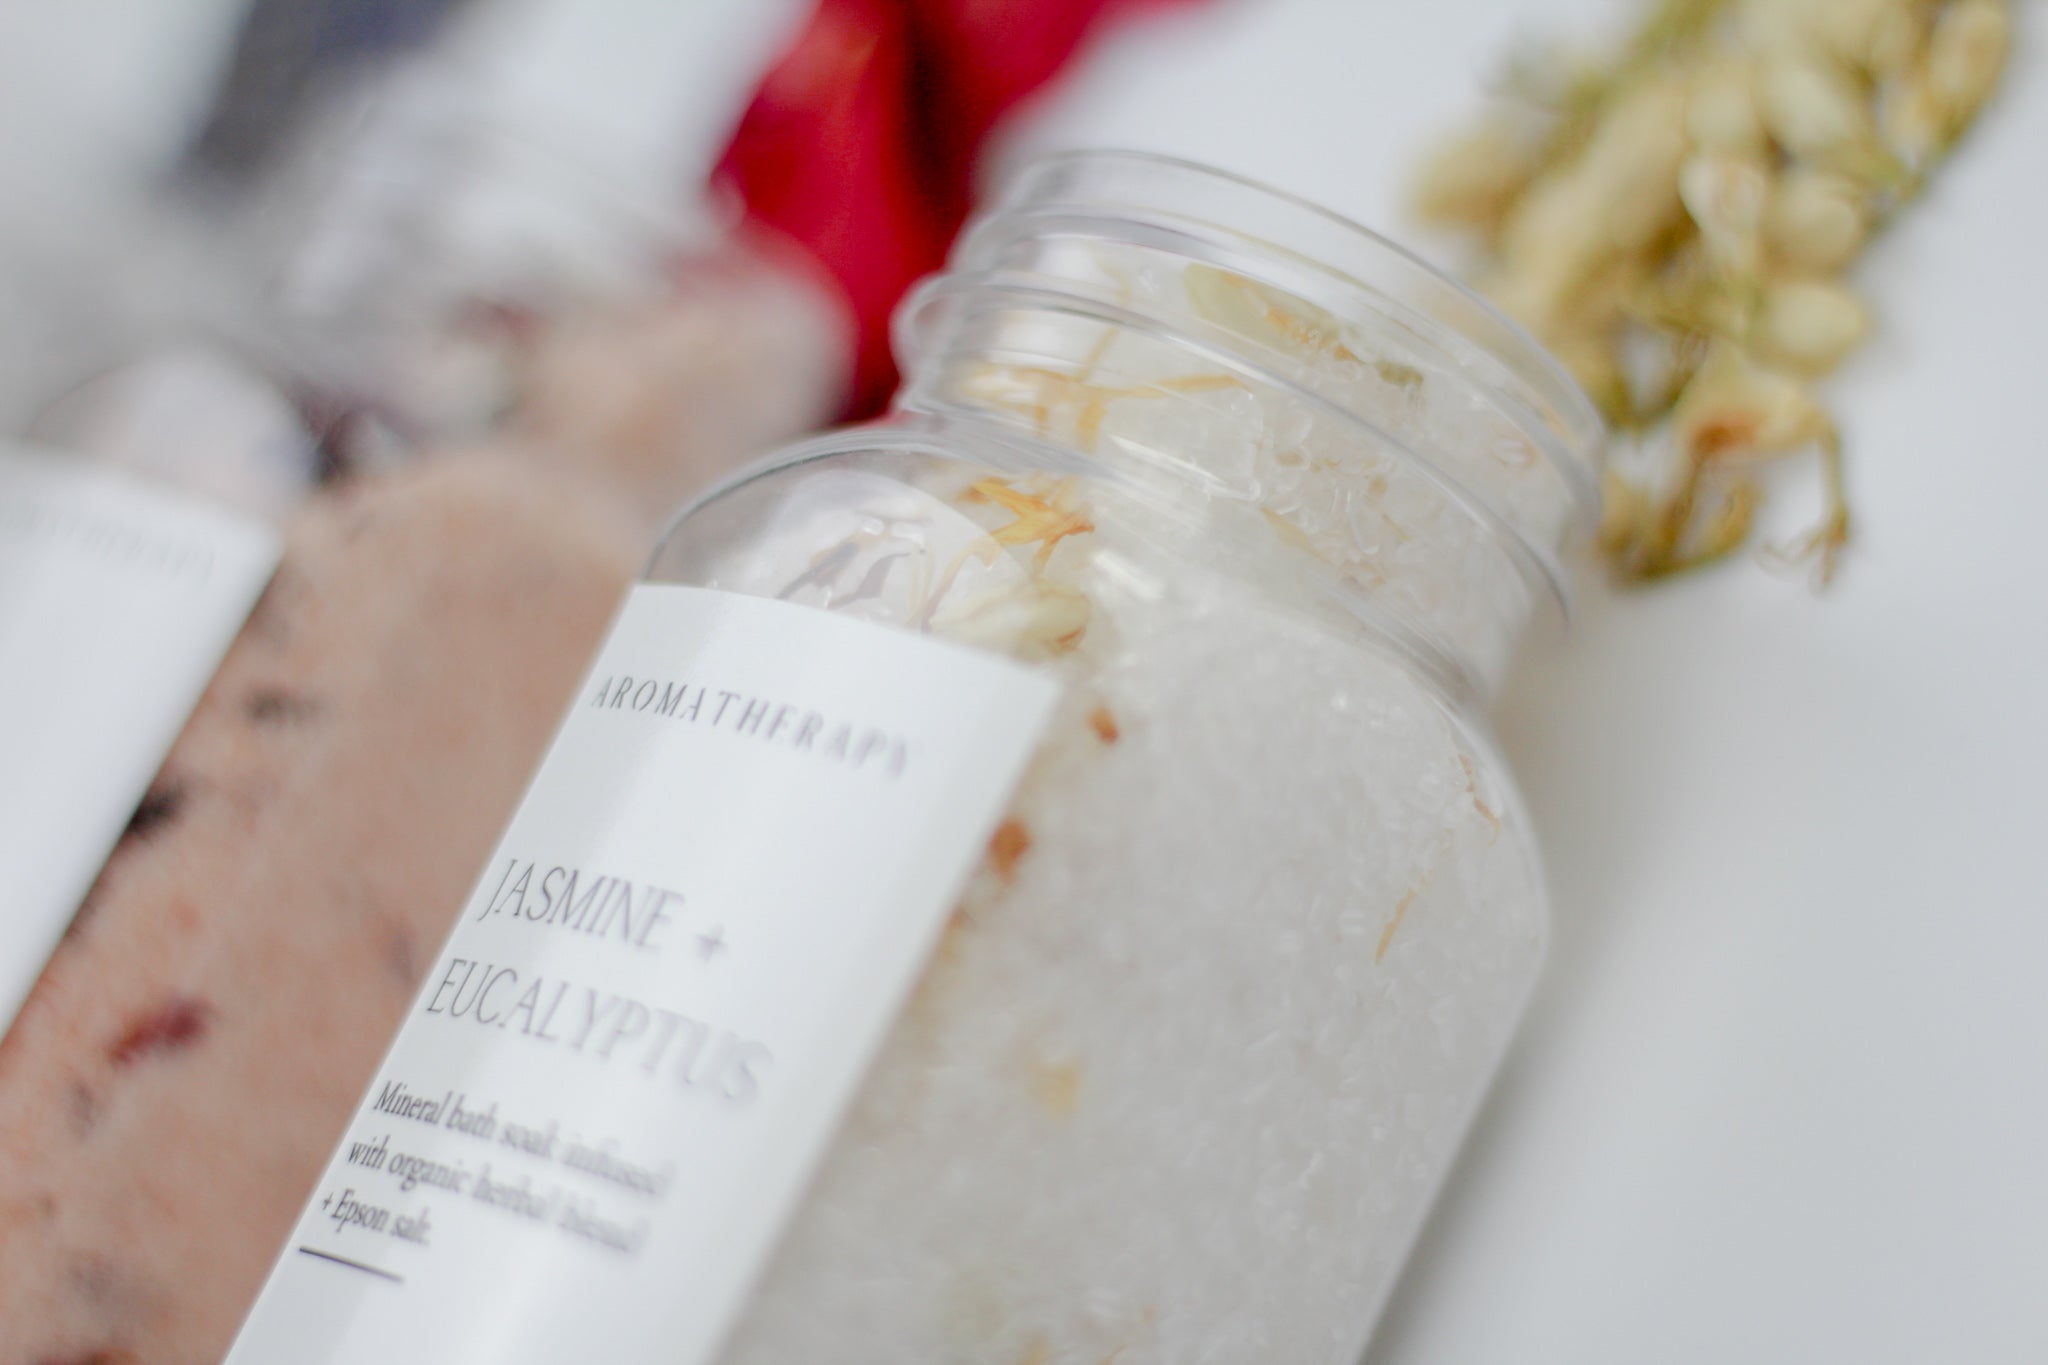 Jasmine Organic Bath Salt